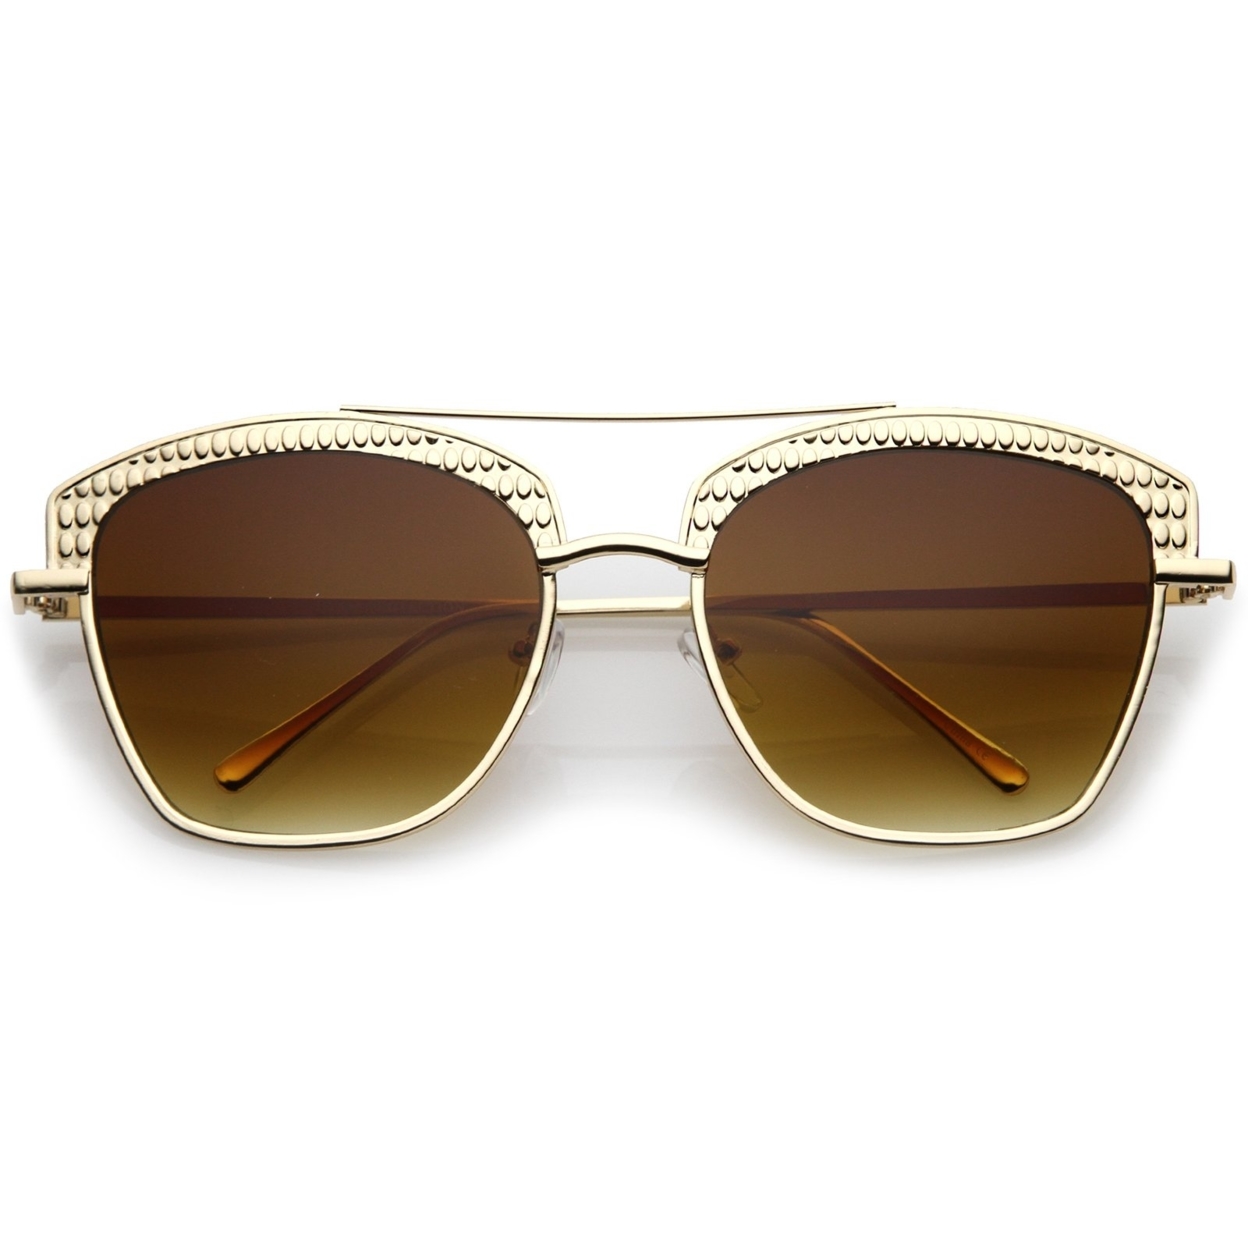 Women's Crossbar Slim Arms Textured Metal Flat Lens Square Sunglasses 58mm - Gold / Amber